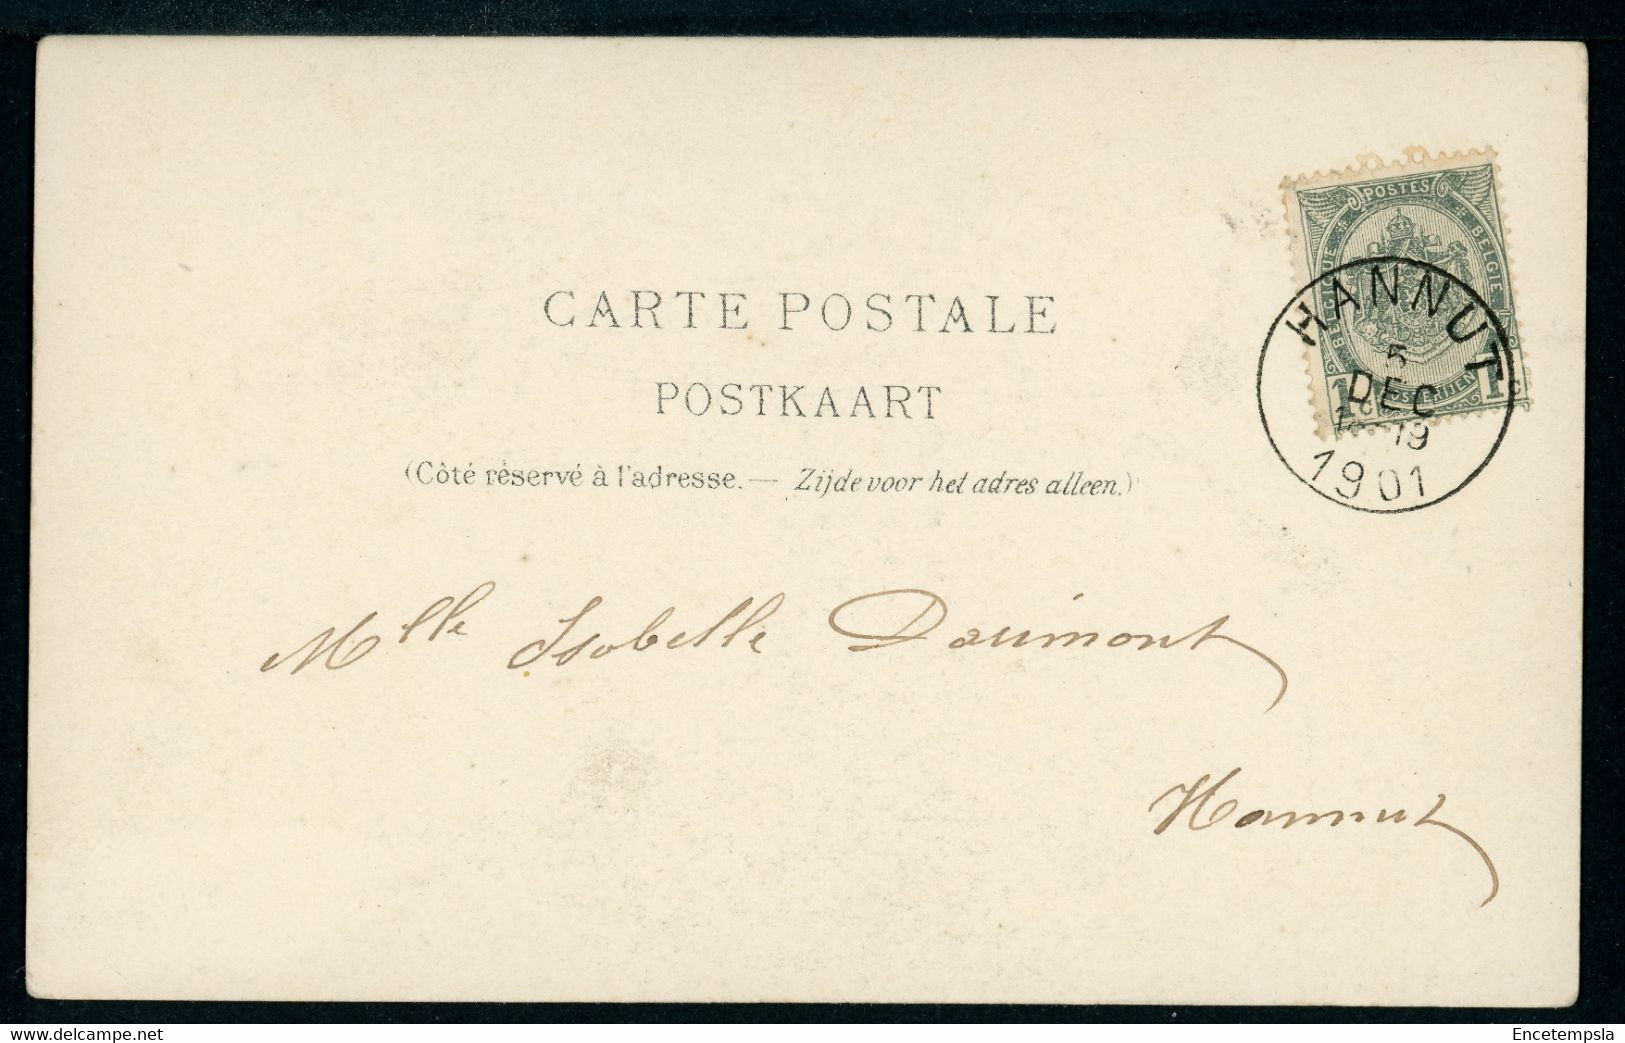 CPA - Carte Postale - Belgique - Hannut - Route De Namur - 1901 (CP20485OK) - Hannut